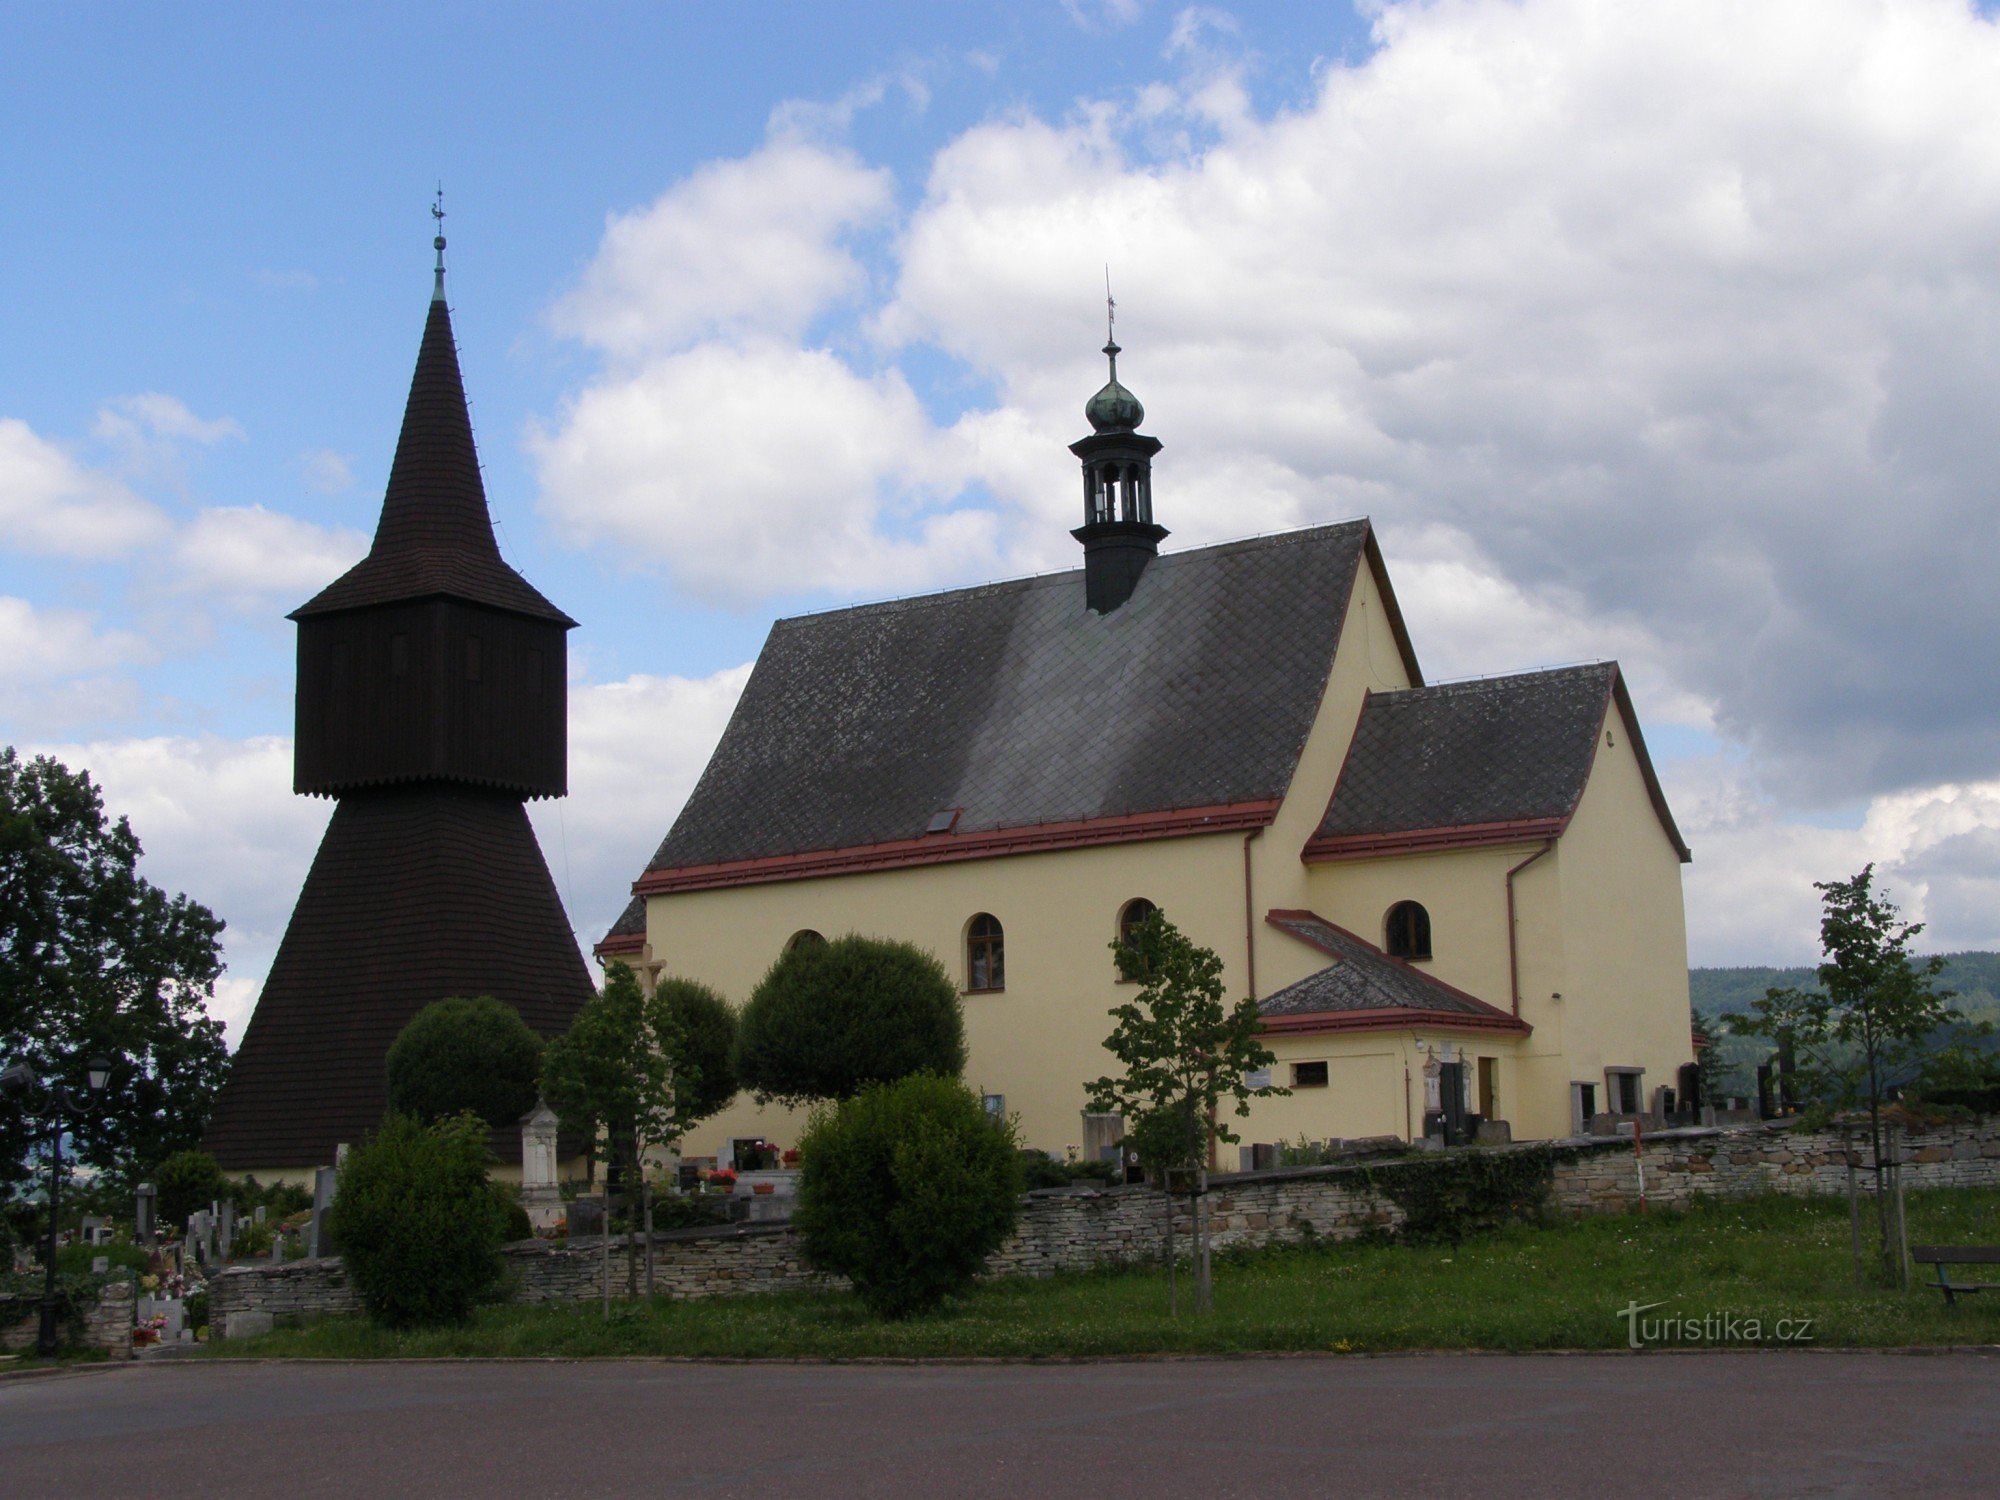 Rtyne στο Podkrkonoší - εκκλησία του Αγ. Ο Ιωάννης ο Βαπτιστής με το καμπαναριό